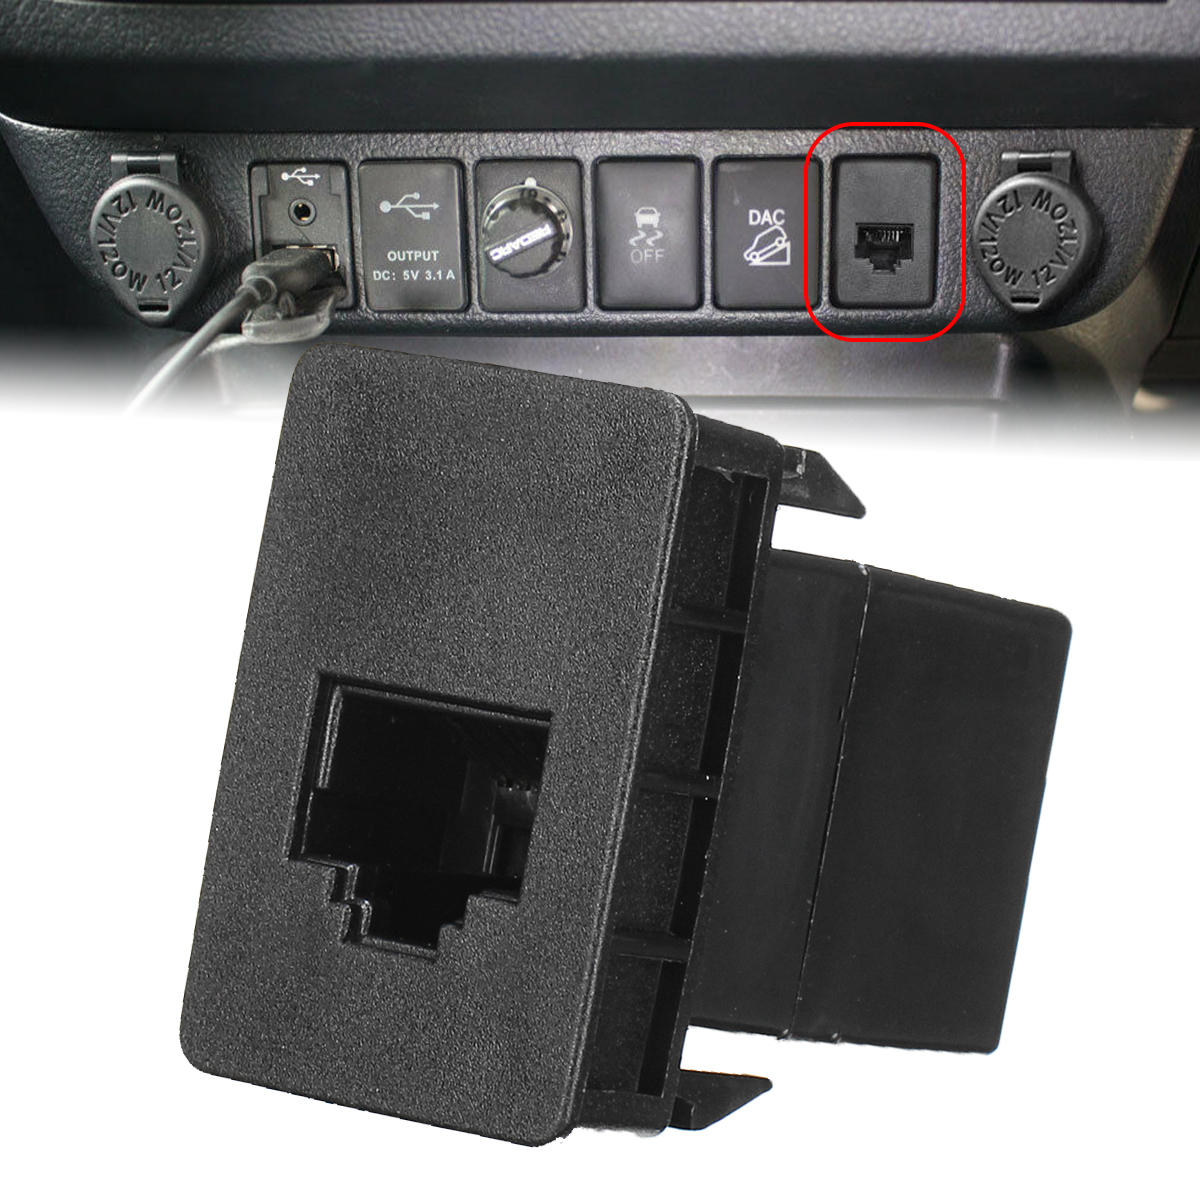 Auto CB UHF Blank Socket RJ45 Radio Schakelpaneel Dash Voor Toyota Hilux Landcruiser RAV4 Prado